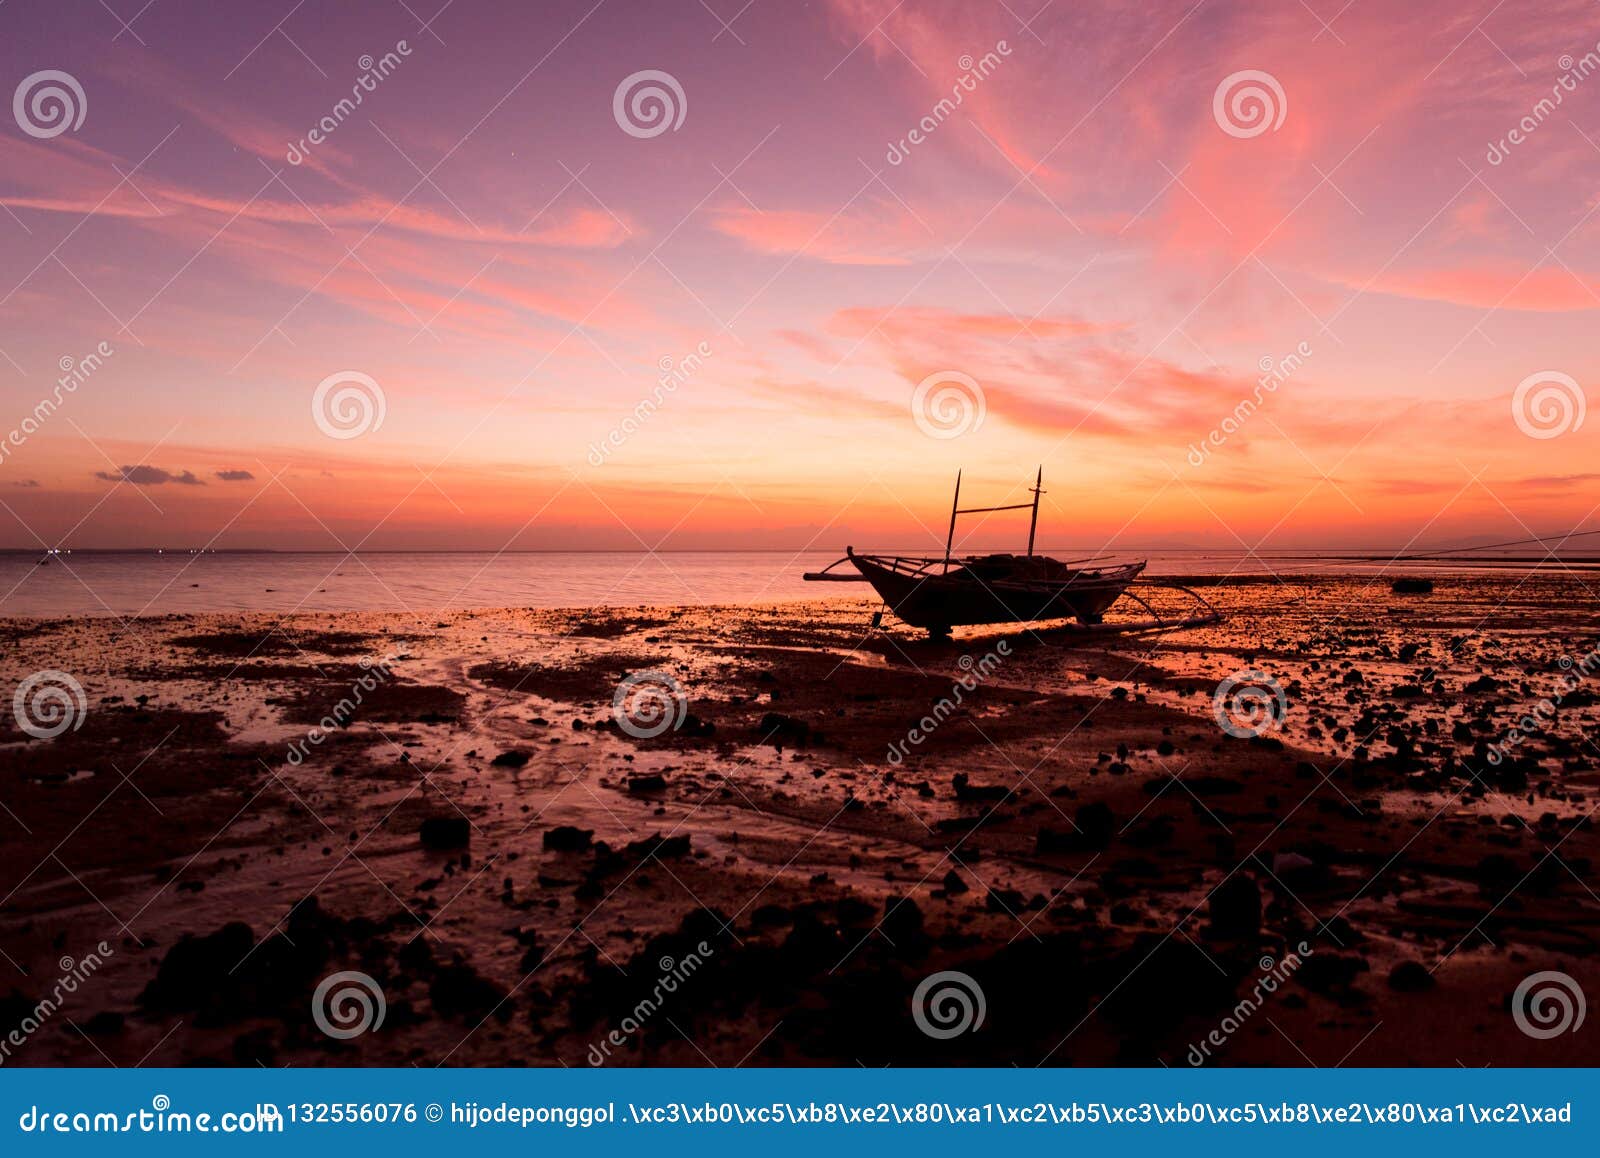 sunset at lakawon beach resort, cadiz, negros occidental, phlippines